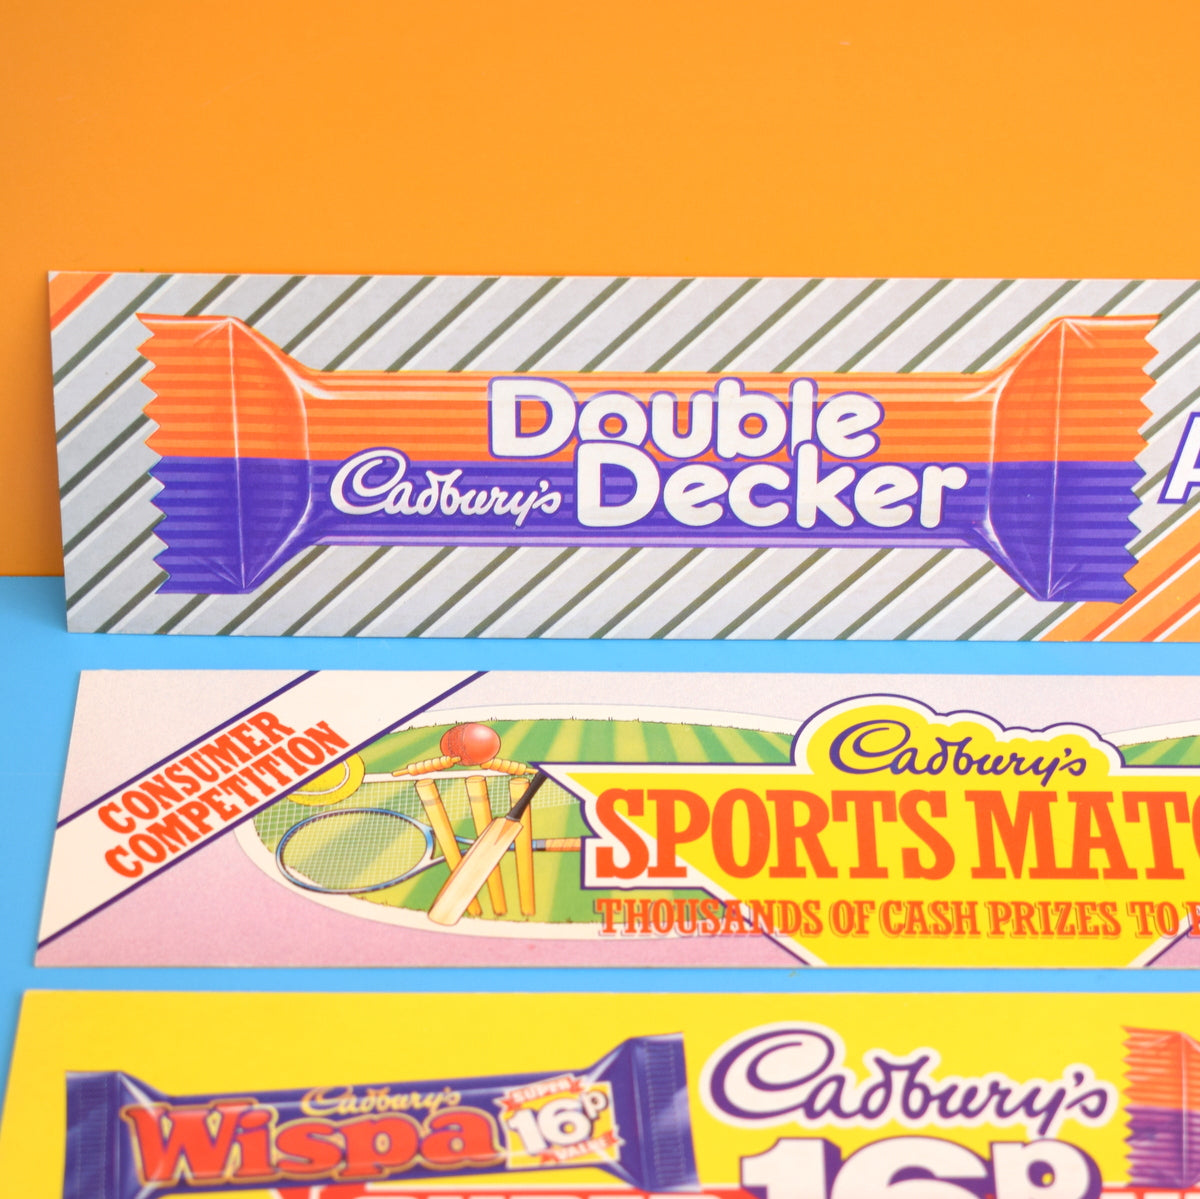 Vintage 1990s Cadbury's Chocolate Advertising Signs